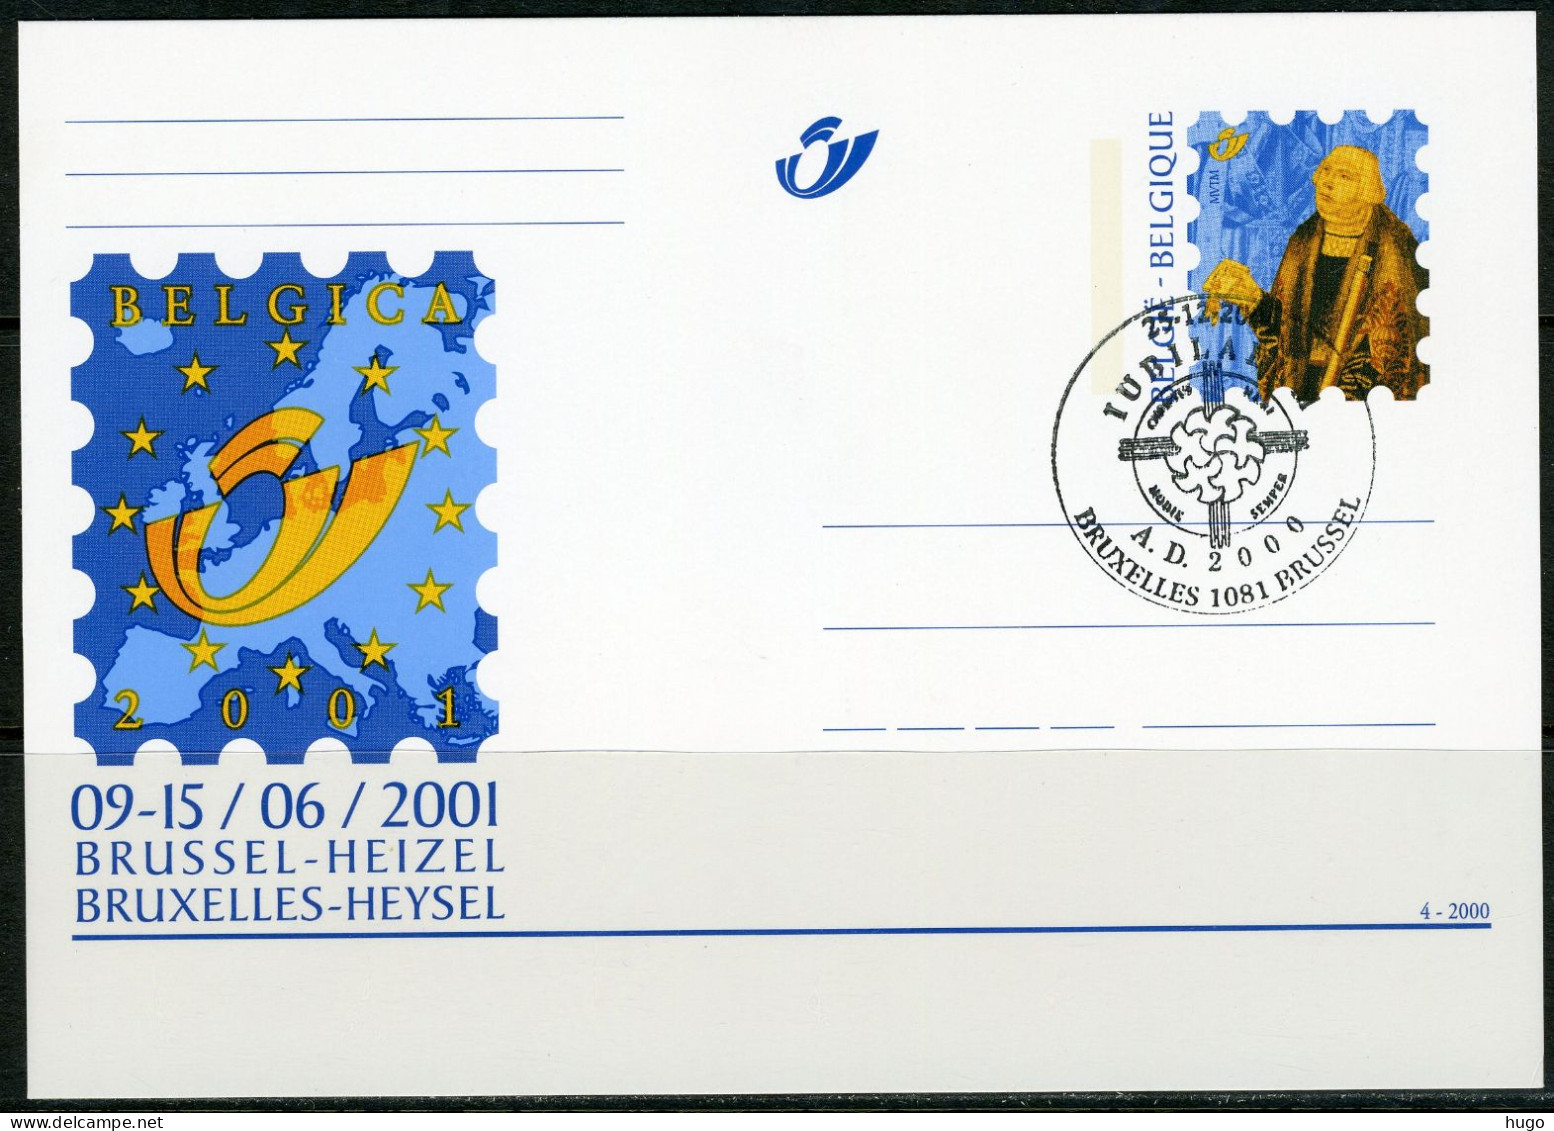 (B) BK85 2000 - Belgica 2001 - Illustrated Postcards (1971-2014) [BK]